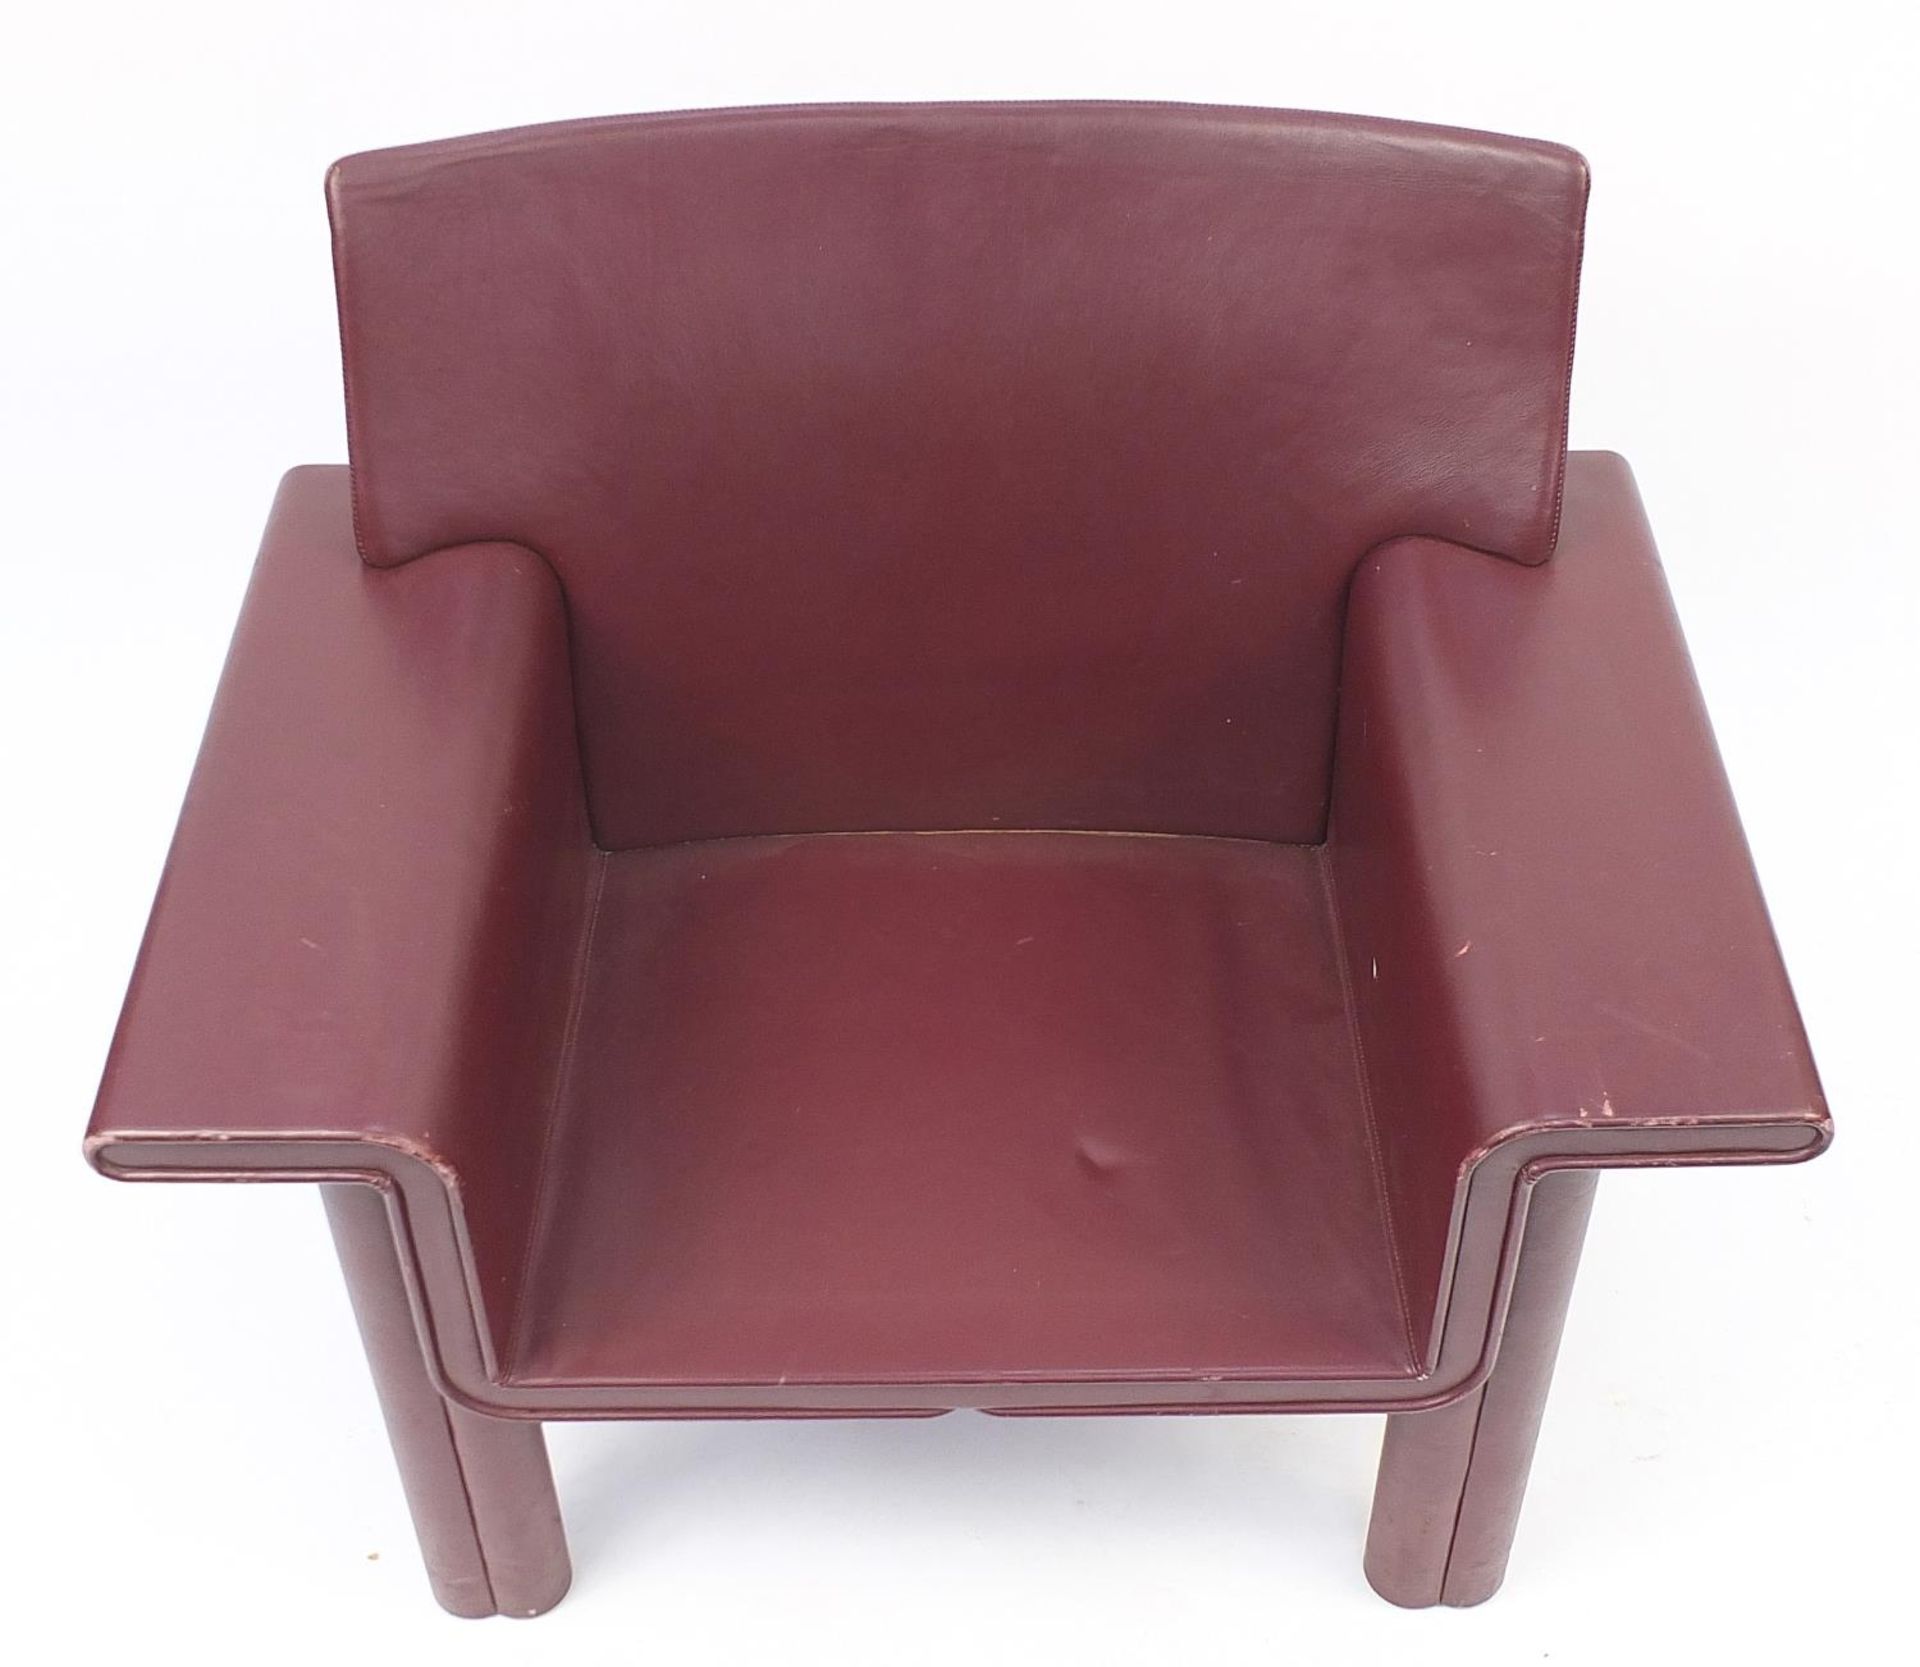 Afra and Tobia Scarpa for Meritalia, Italian burgundy leather Cornelia armchair, 77cm H x 95cm W x - Image 3 of 4